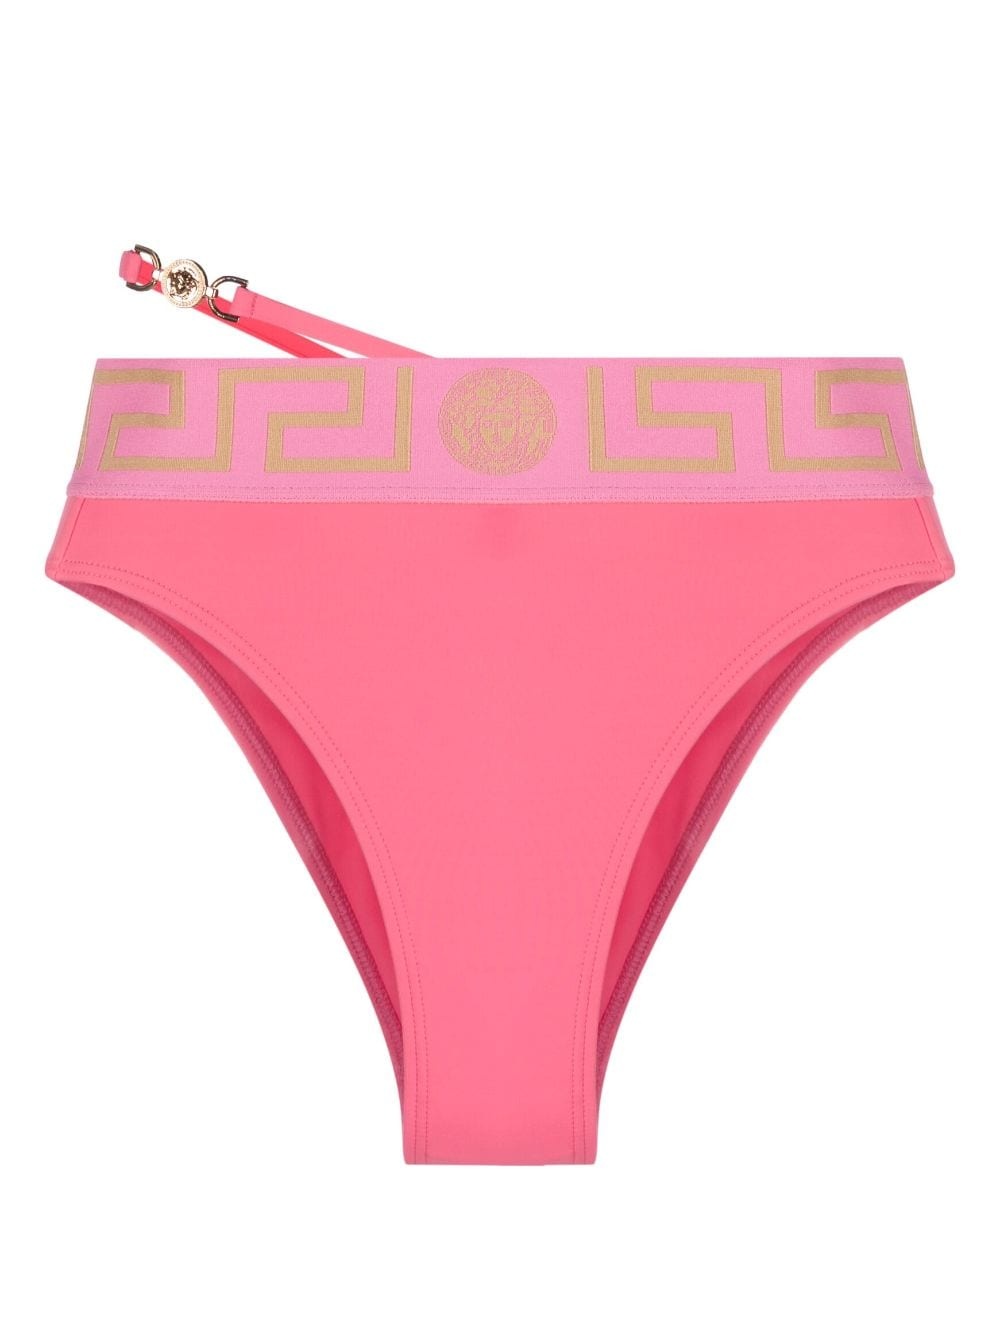 Versace Underwear Pink Dua Lipa Edition Bikini Bottom 'Flamingo